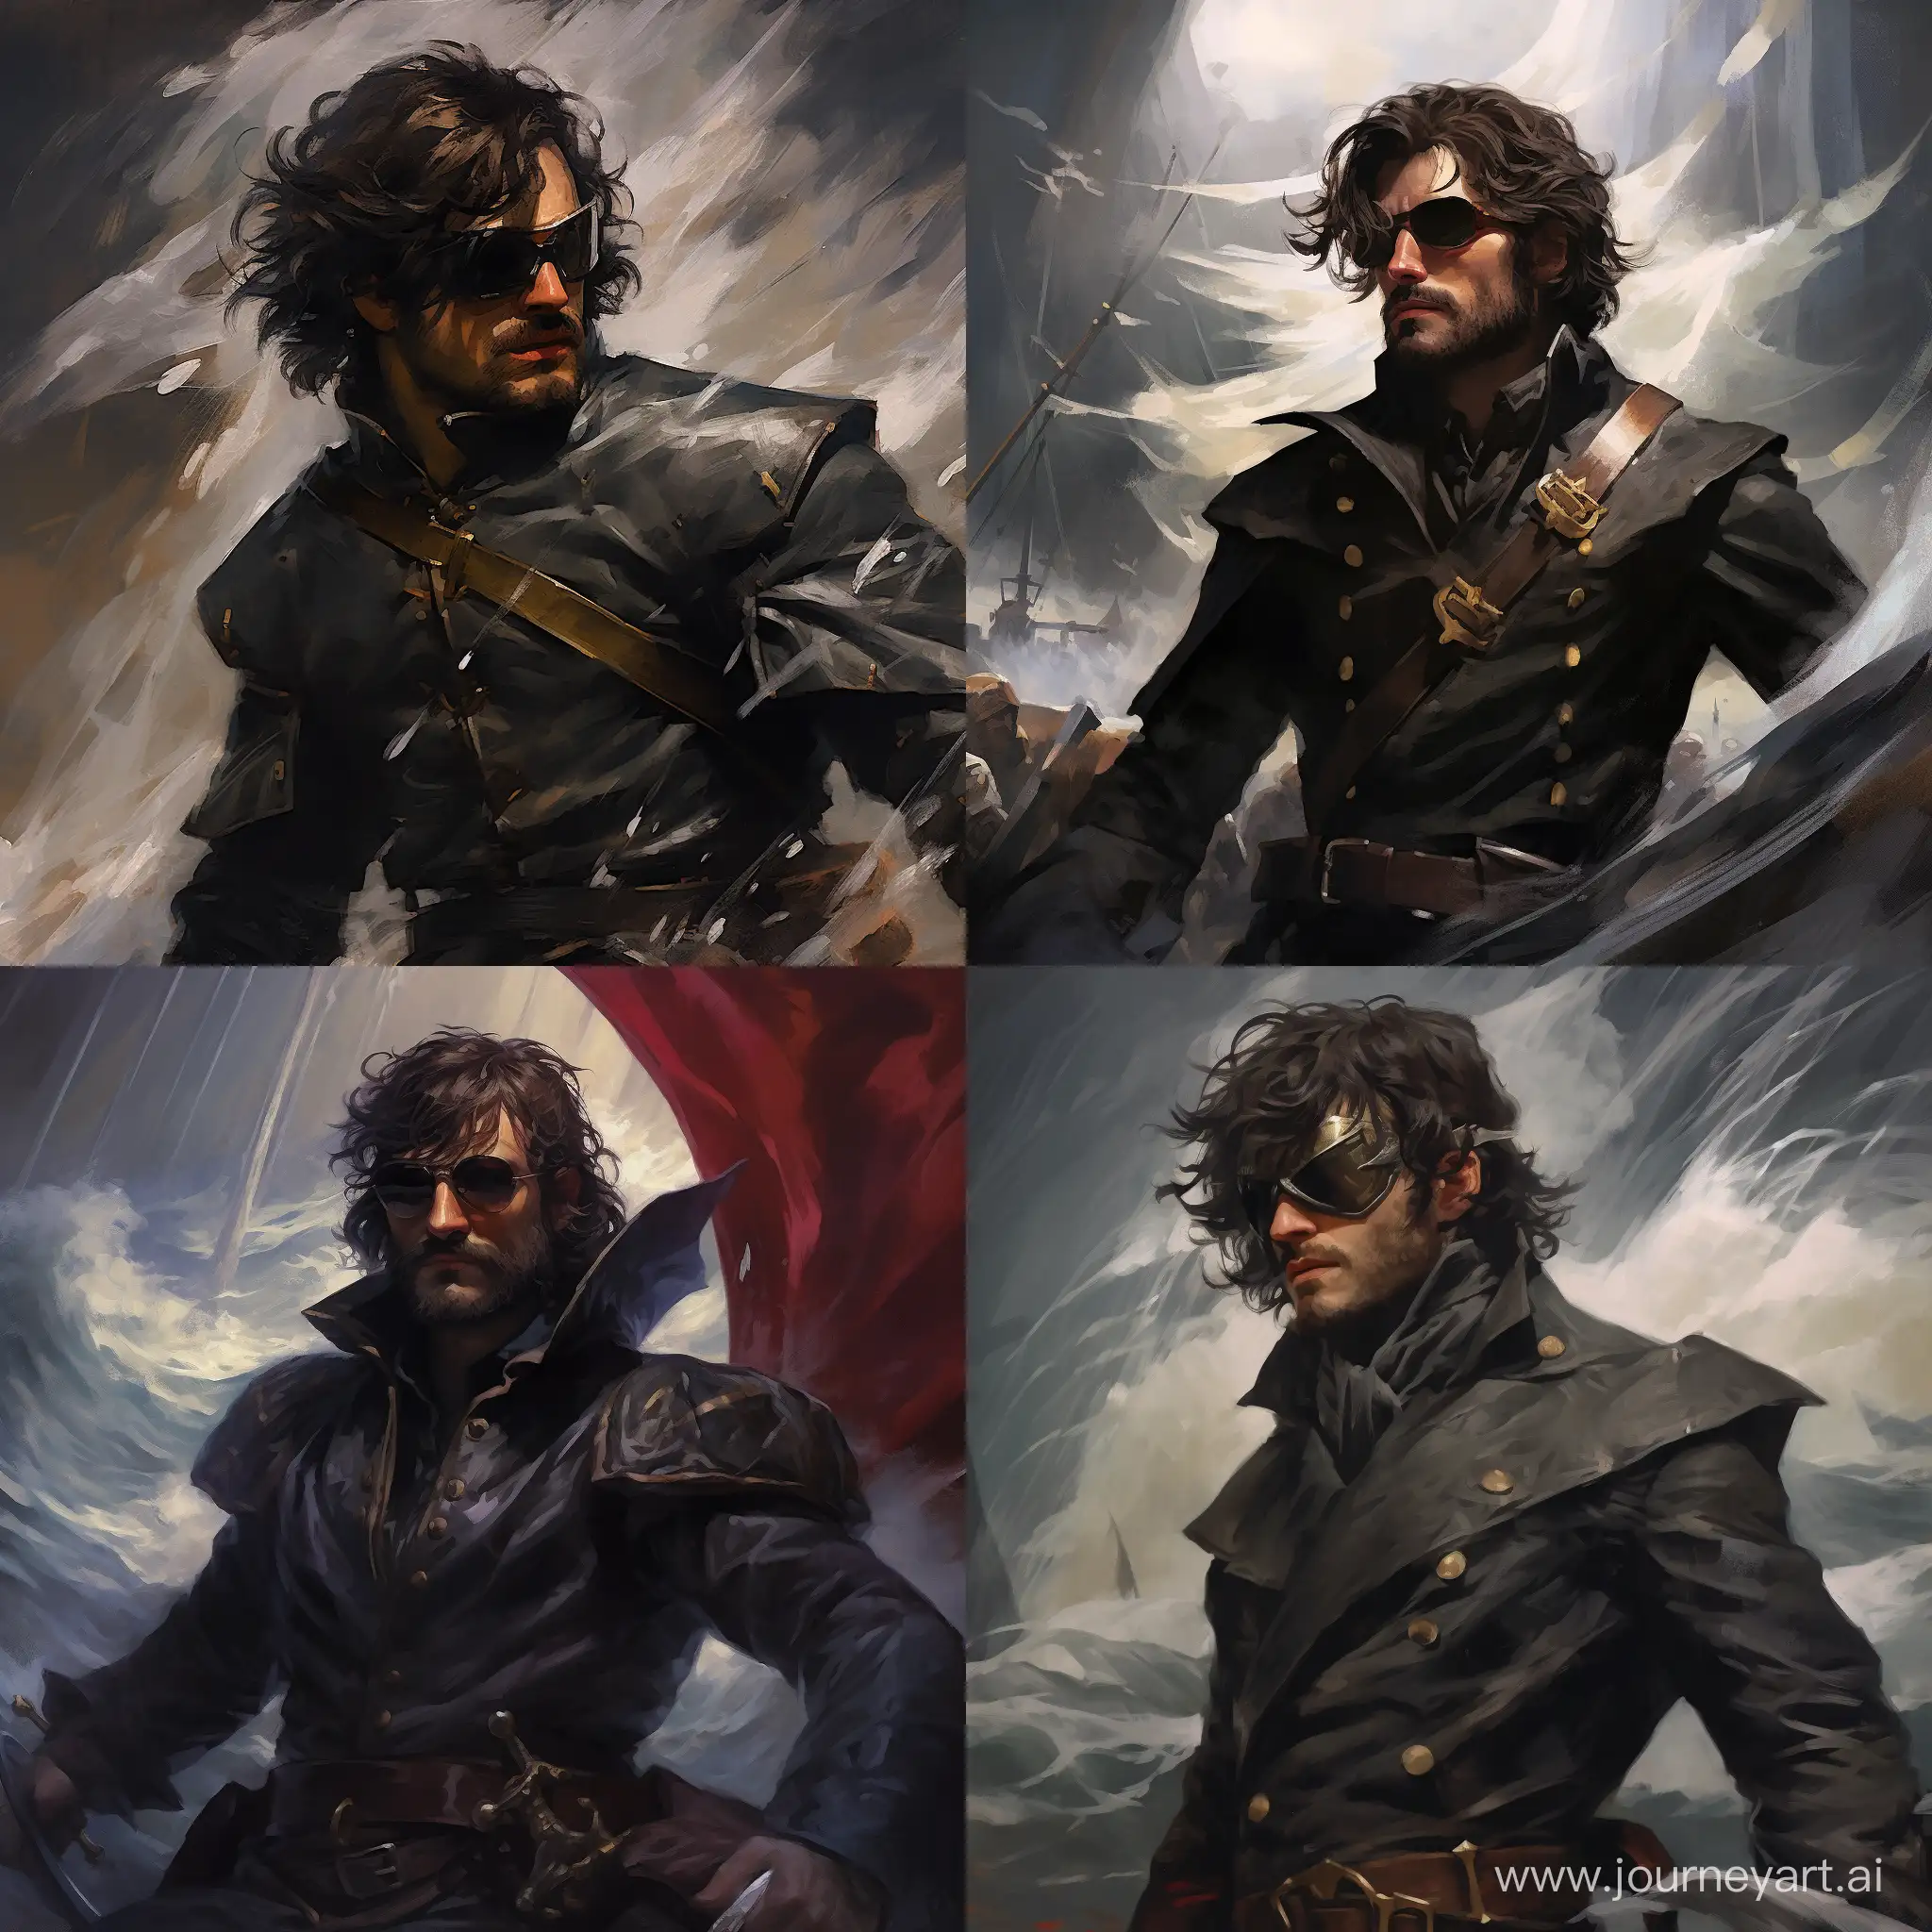 Euron-Greyjoy-Portrait-Young-Joaquin-Phoenix-in-Pirate-Armor-Amidst-Storm